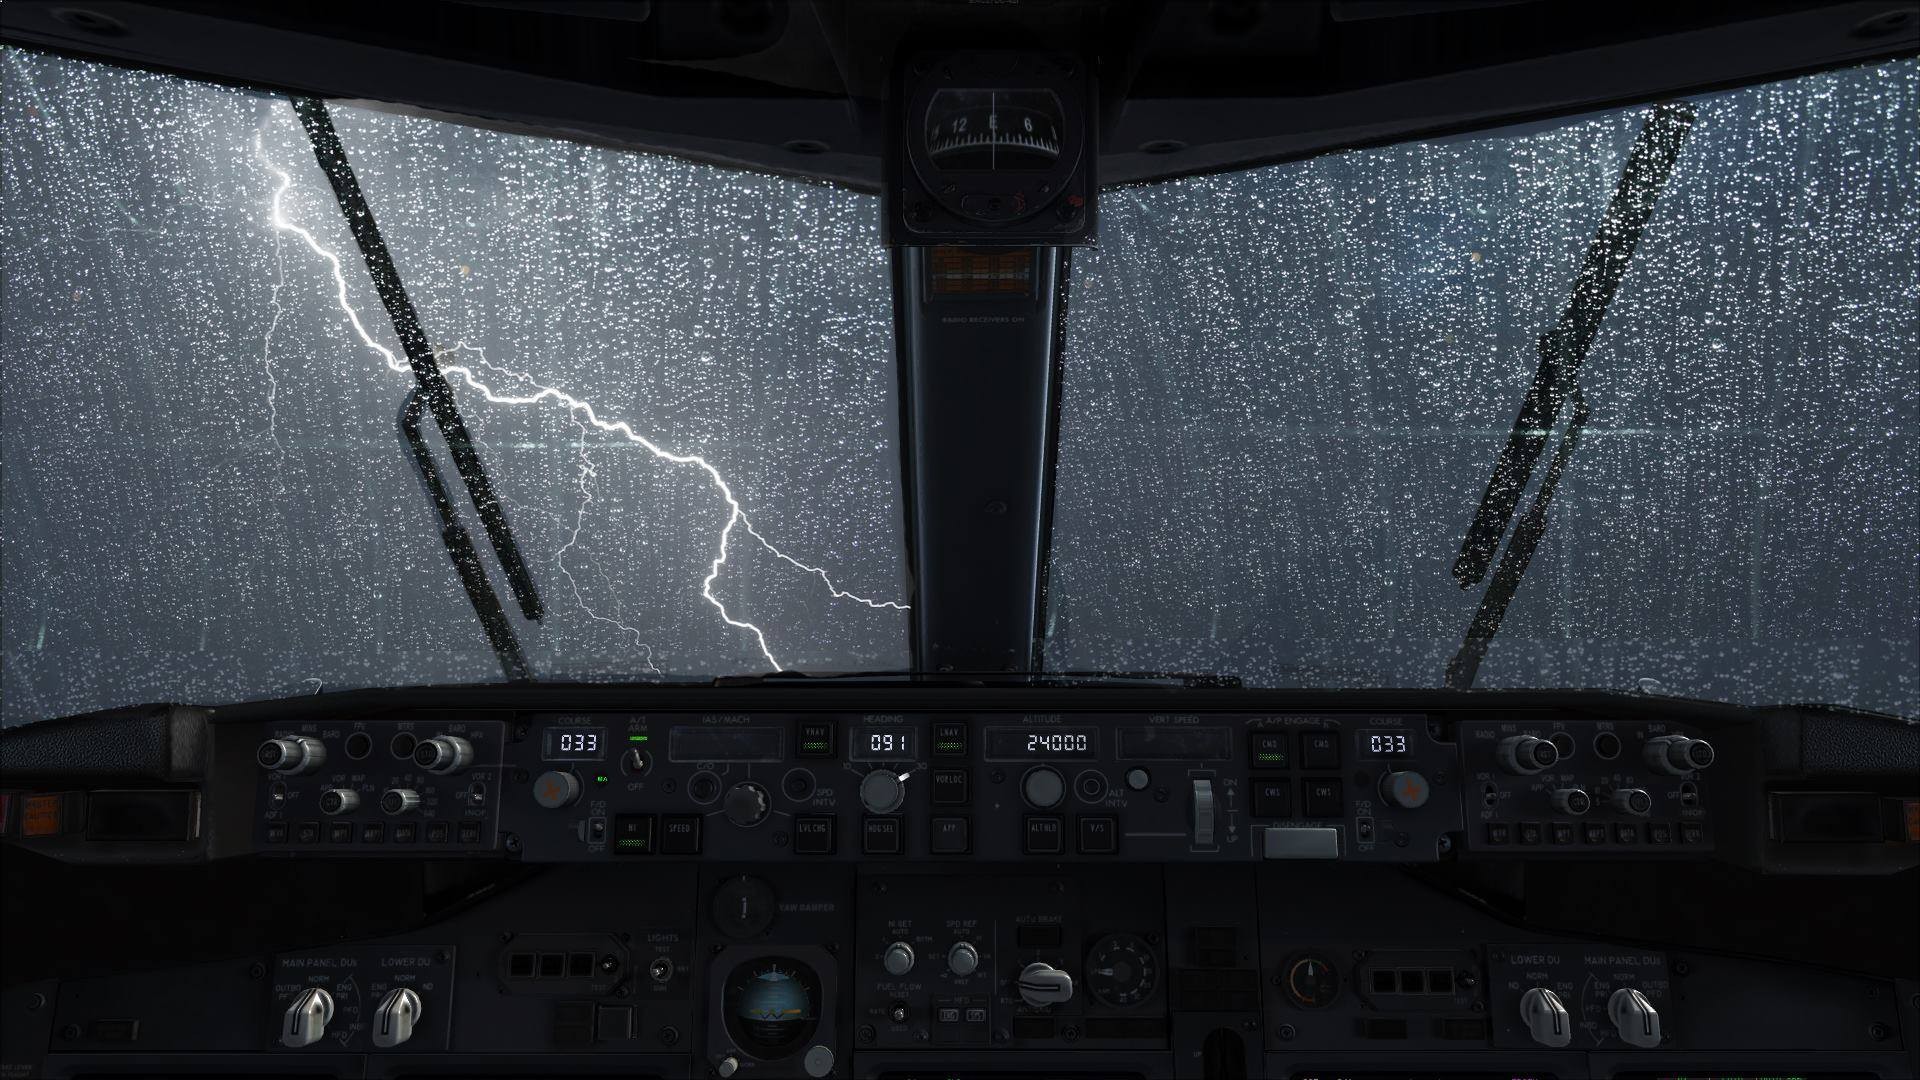 rain, storm, vehicles, aircraft, cockpit, lightning, water drop